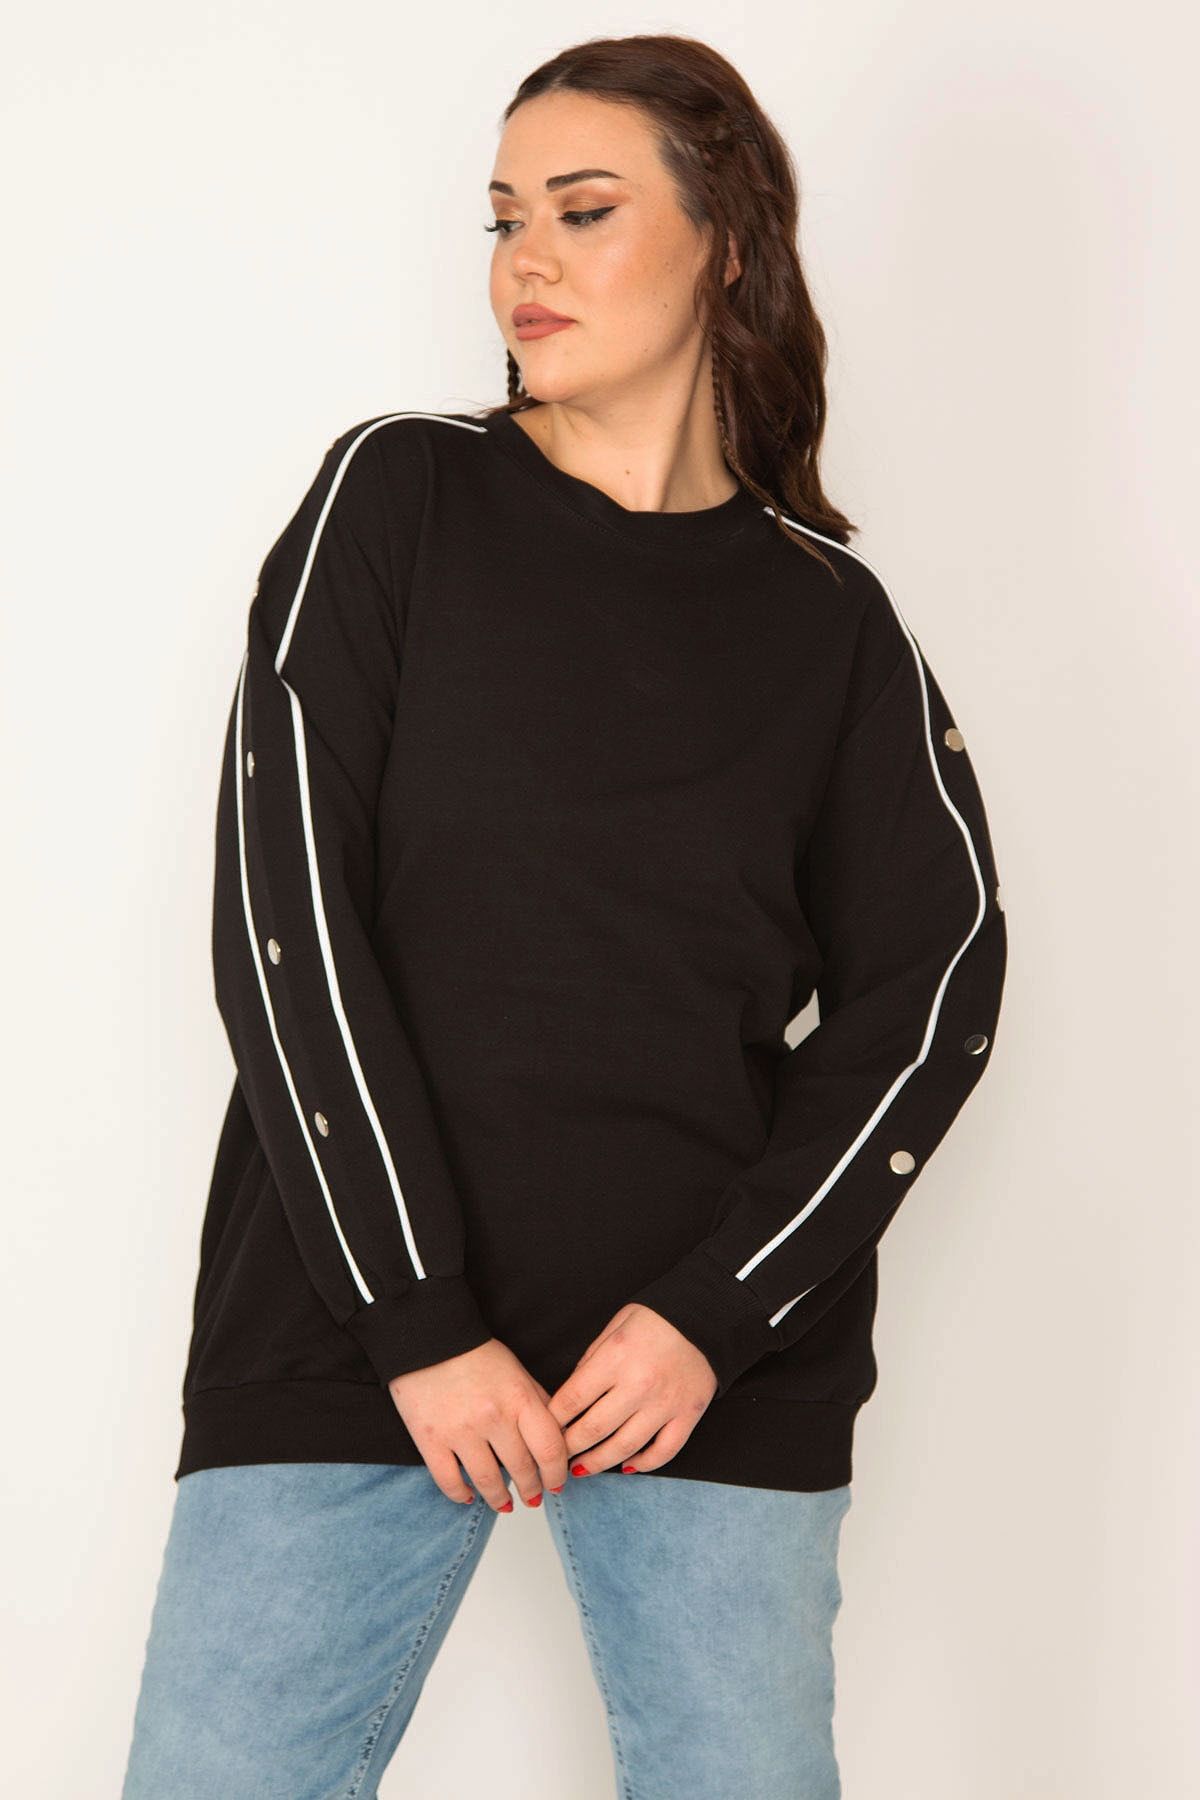 Şans Women's Large Size Black Hooded Shoulderless Sweatshirt